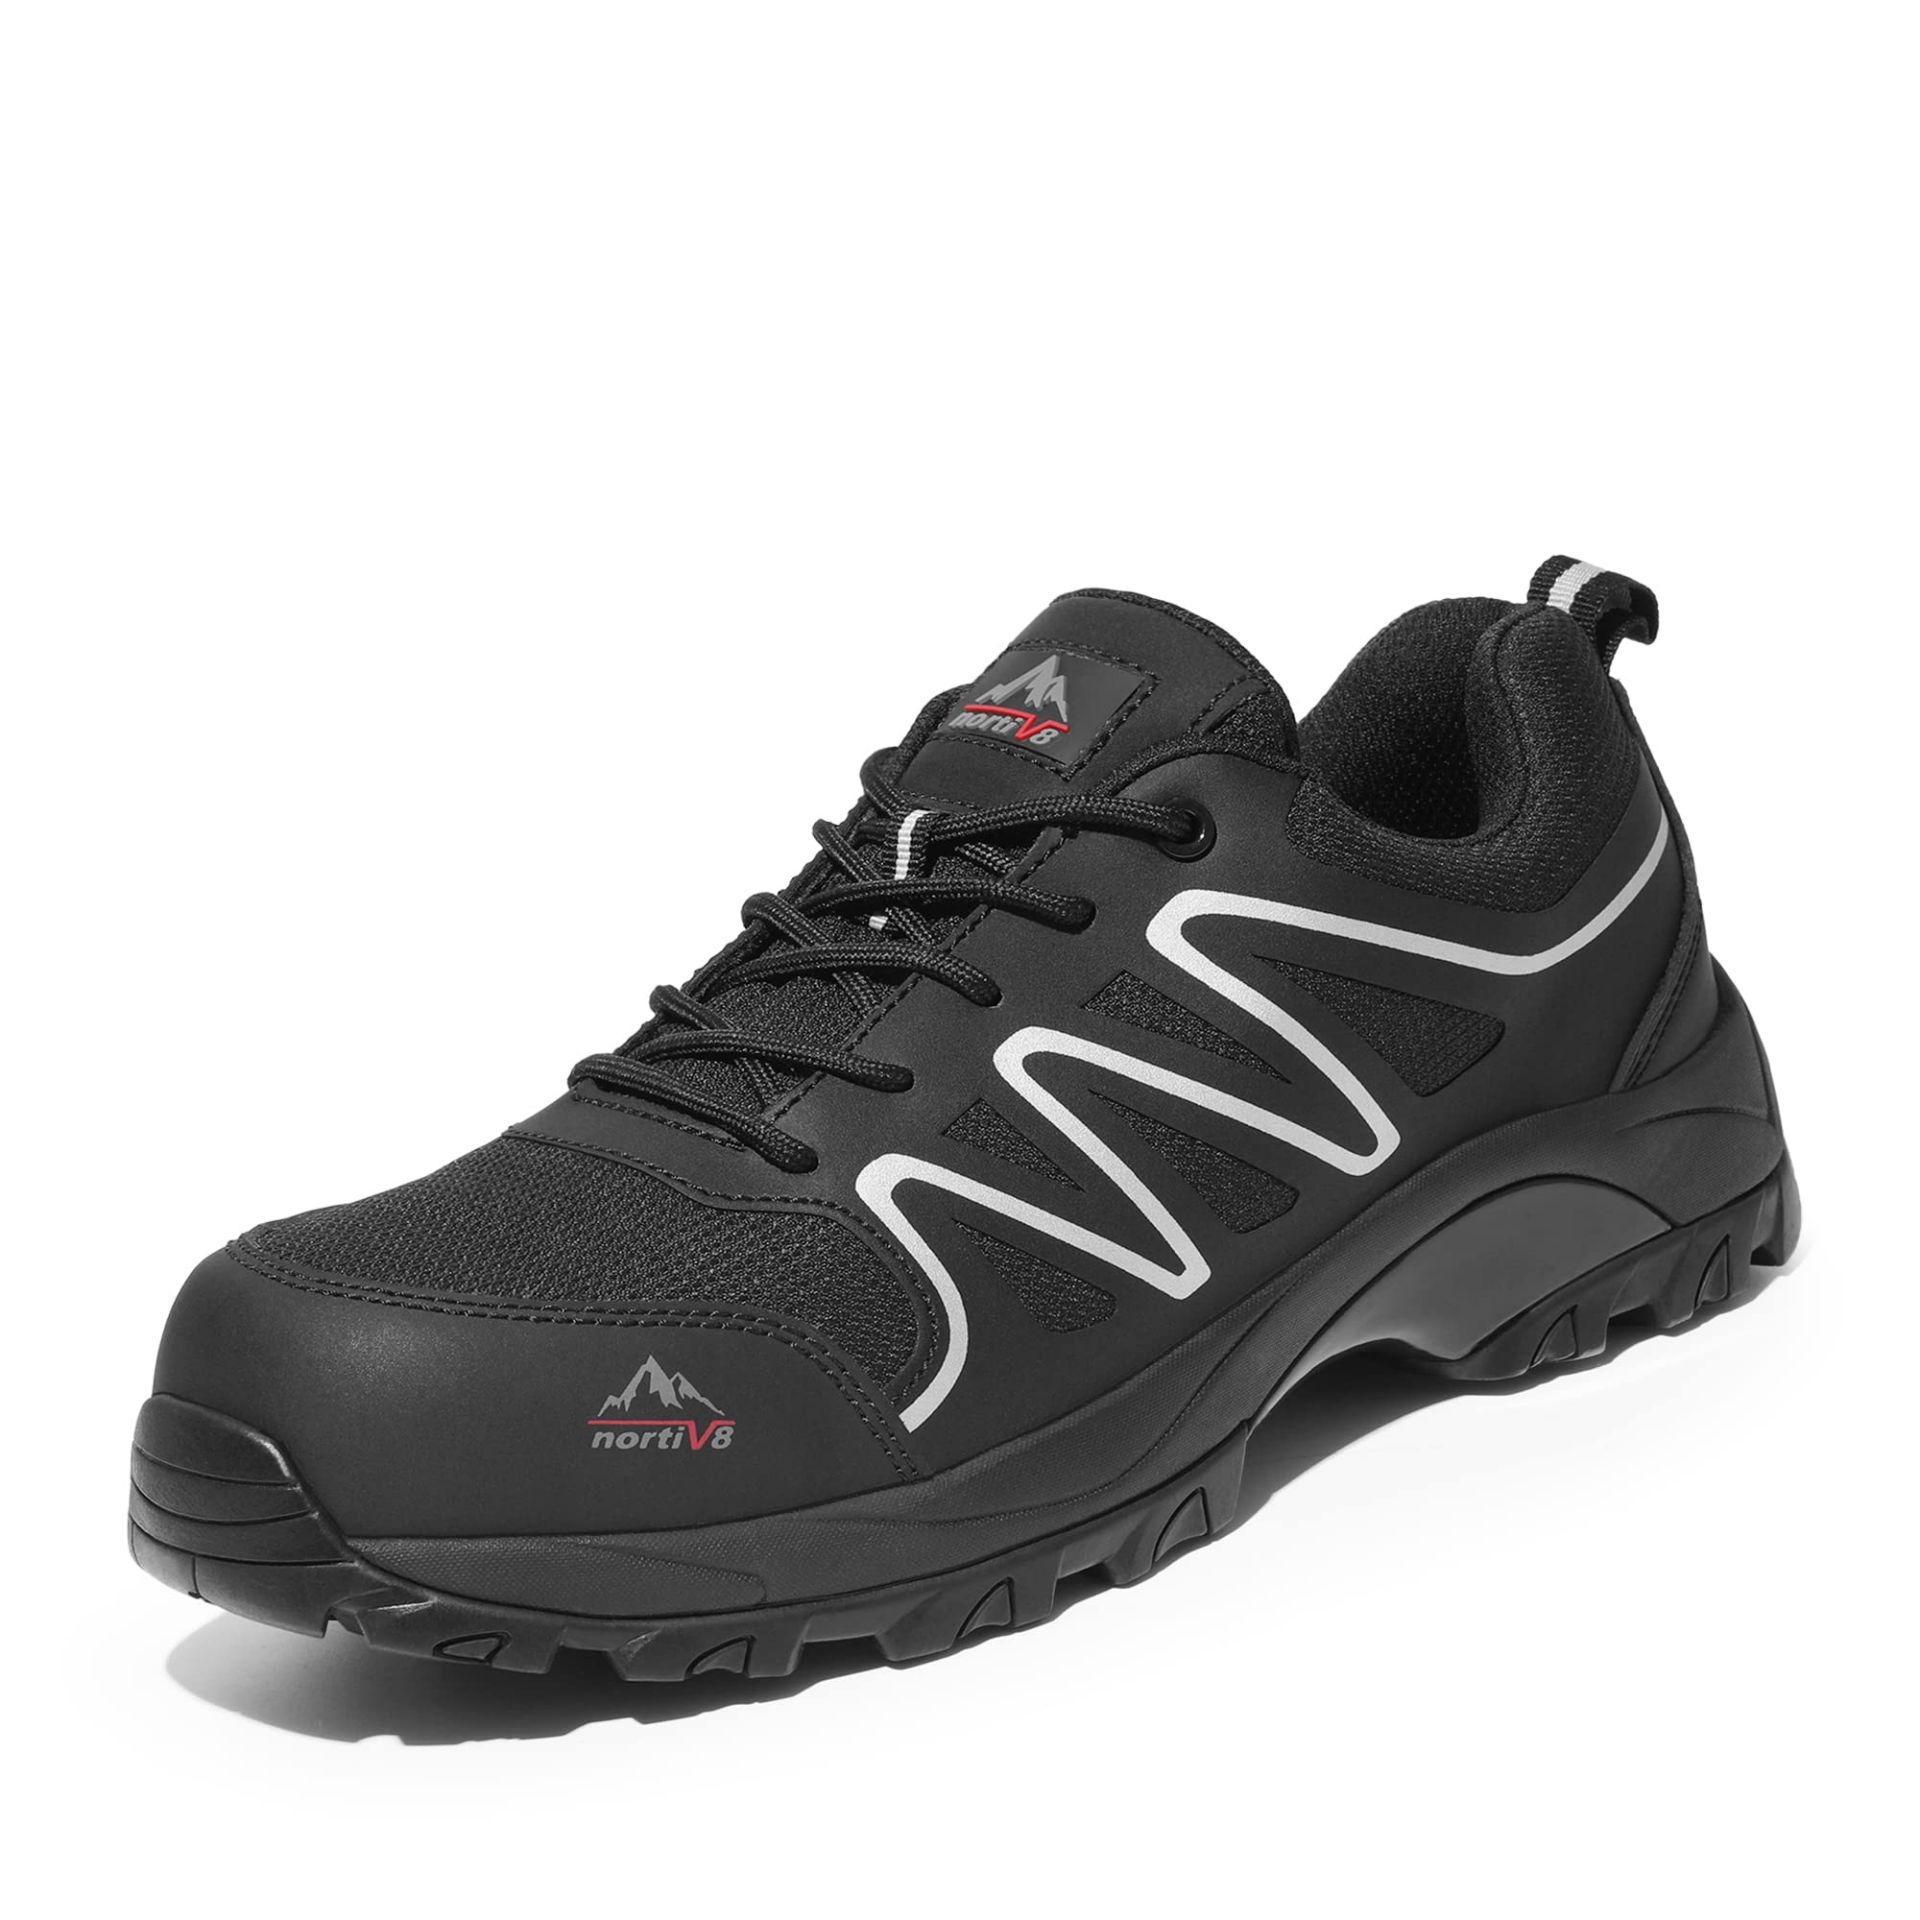 RRP £21.66 NORTIV 8 Mens Safety Trainers Fiberglass Toe Cap Sneakers